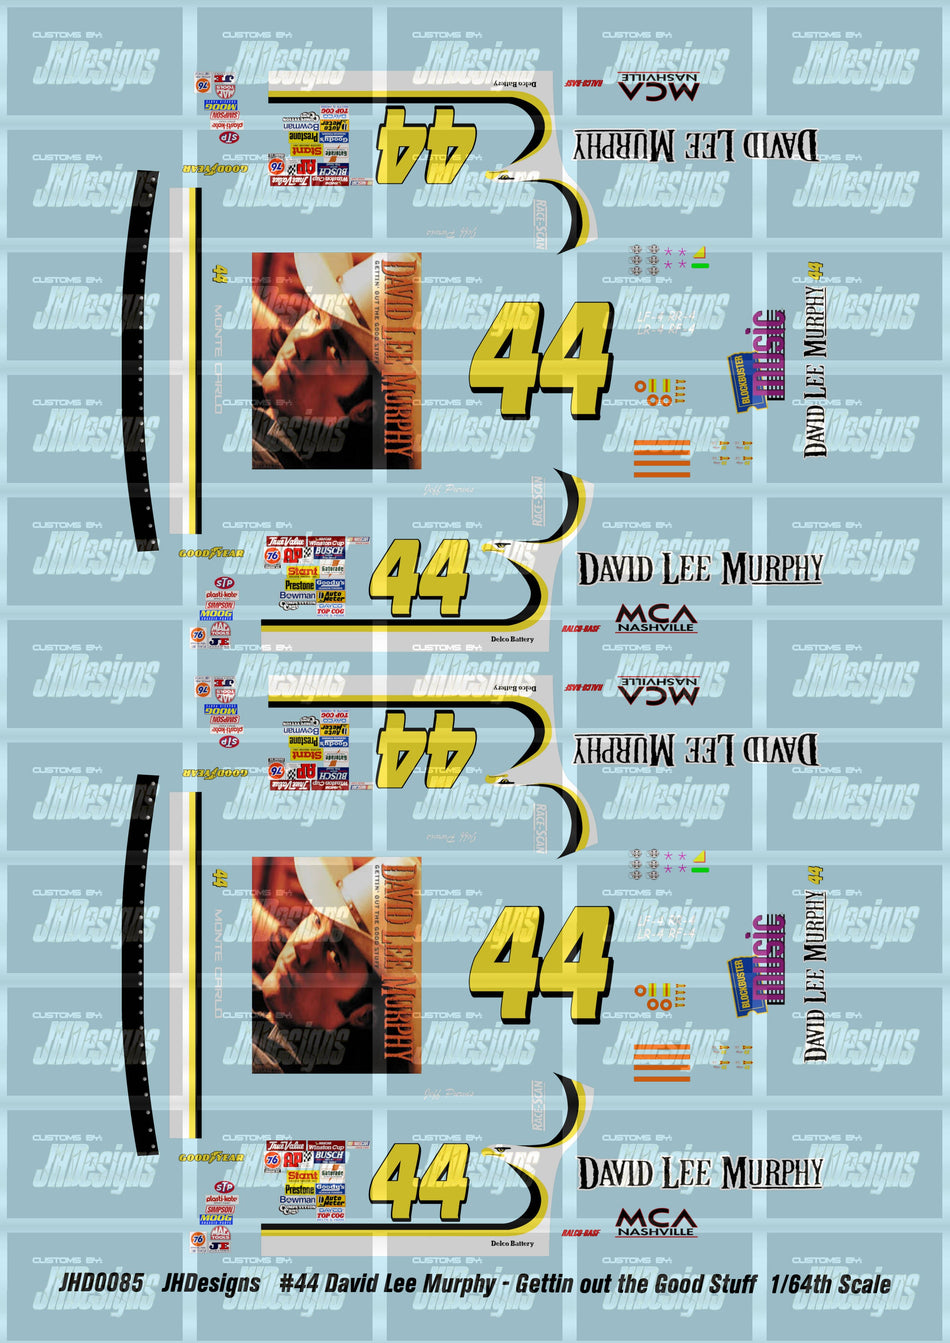 JH Designs Jeff Purvis 1996 CUP #44 David Lee Murphy - Gettin Out the Good Stuff 1:64 Racecar Decal Set